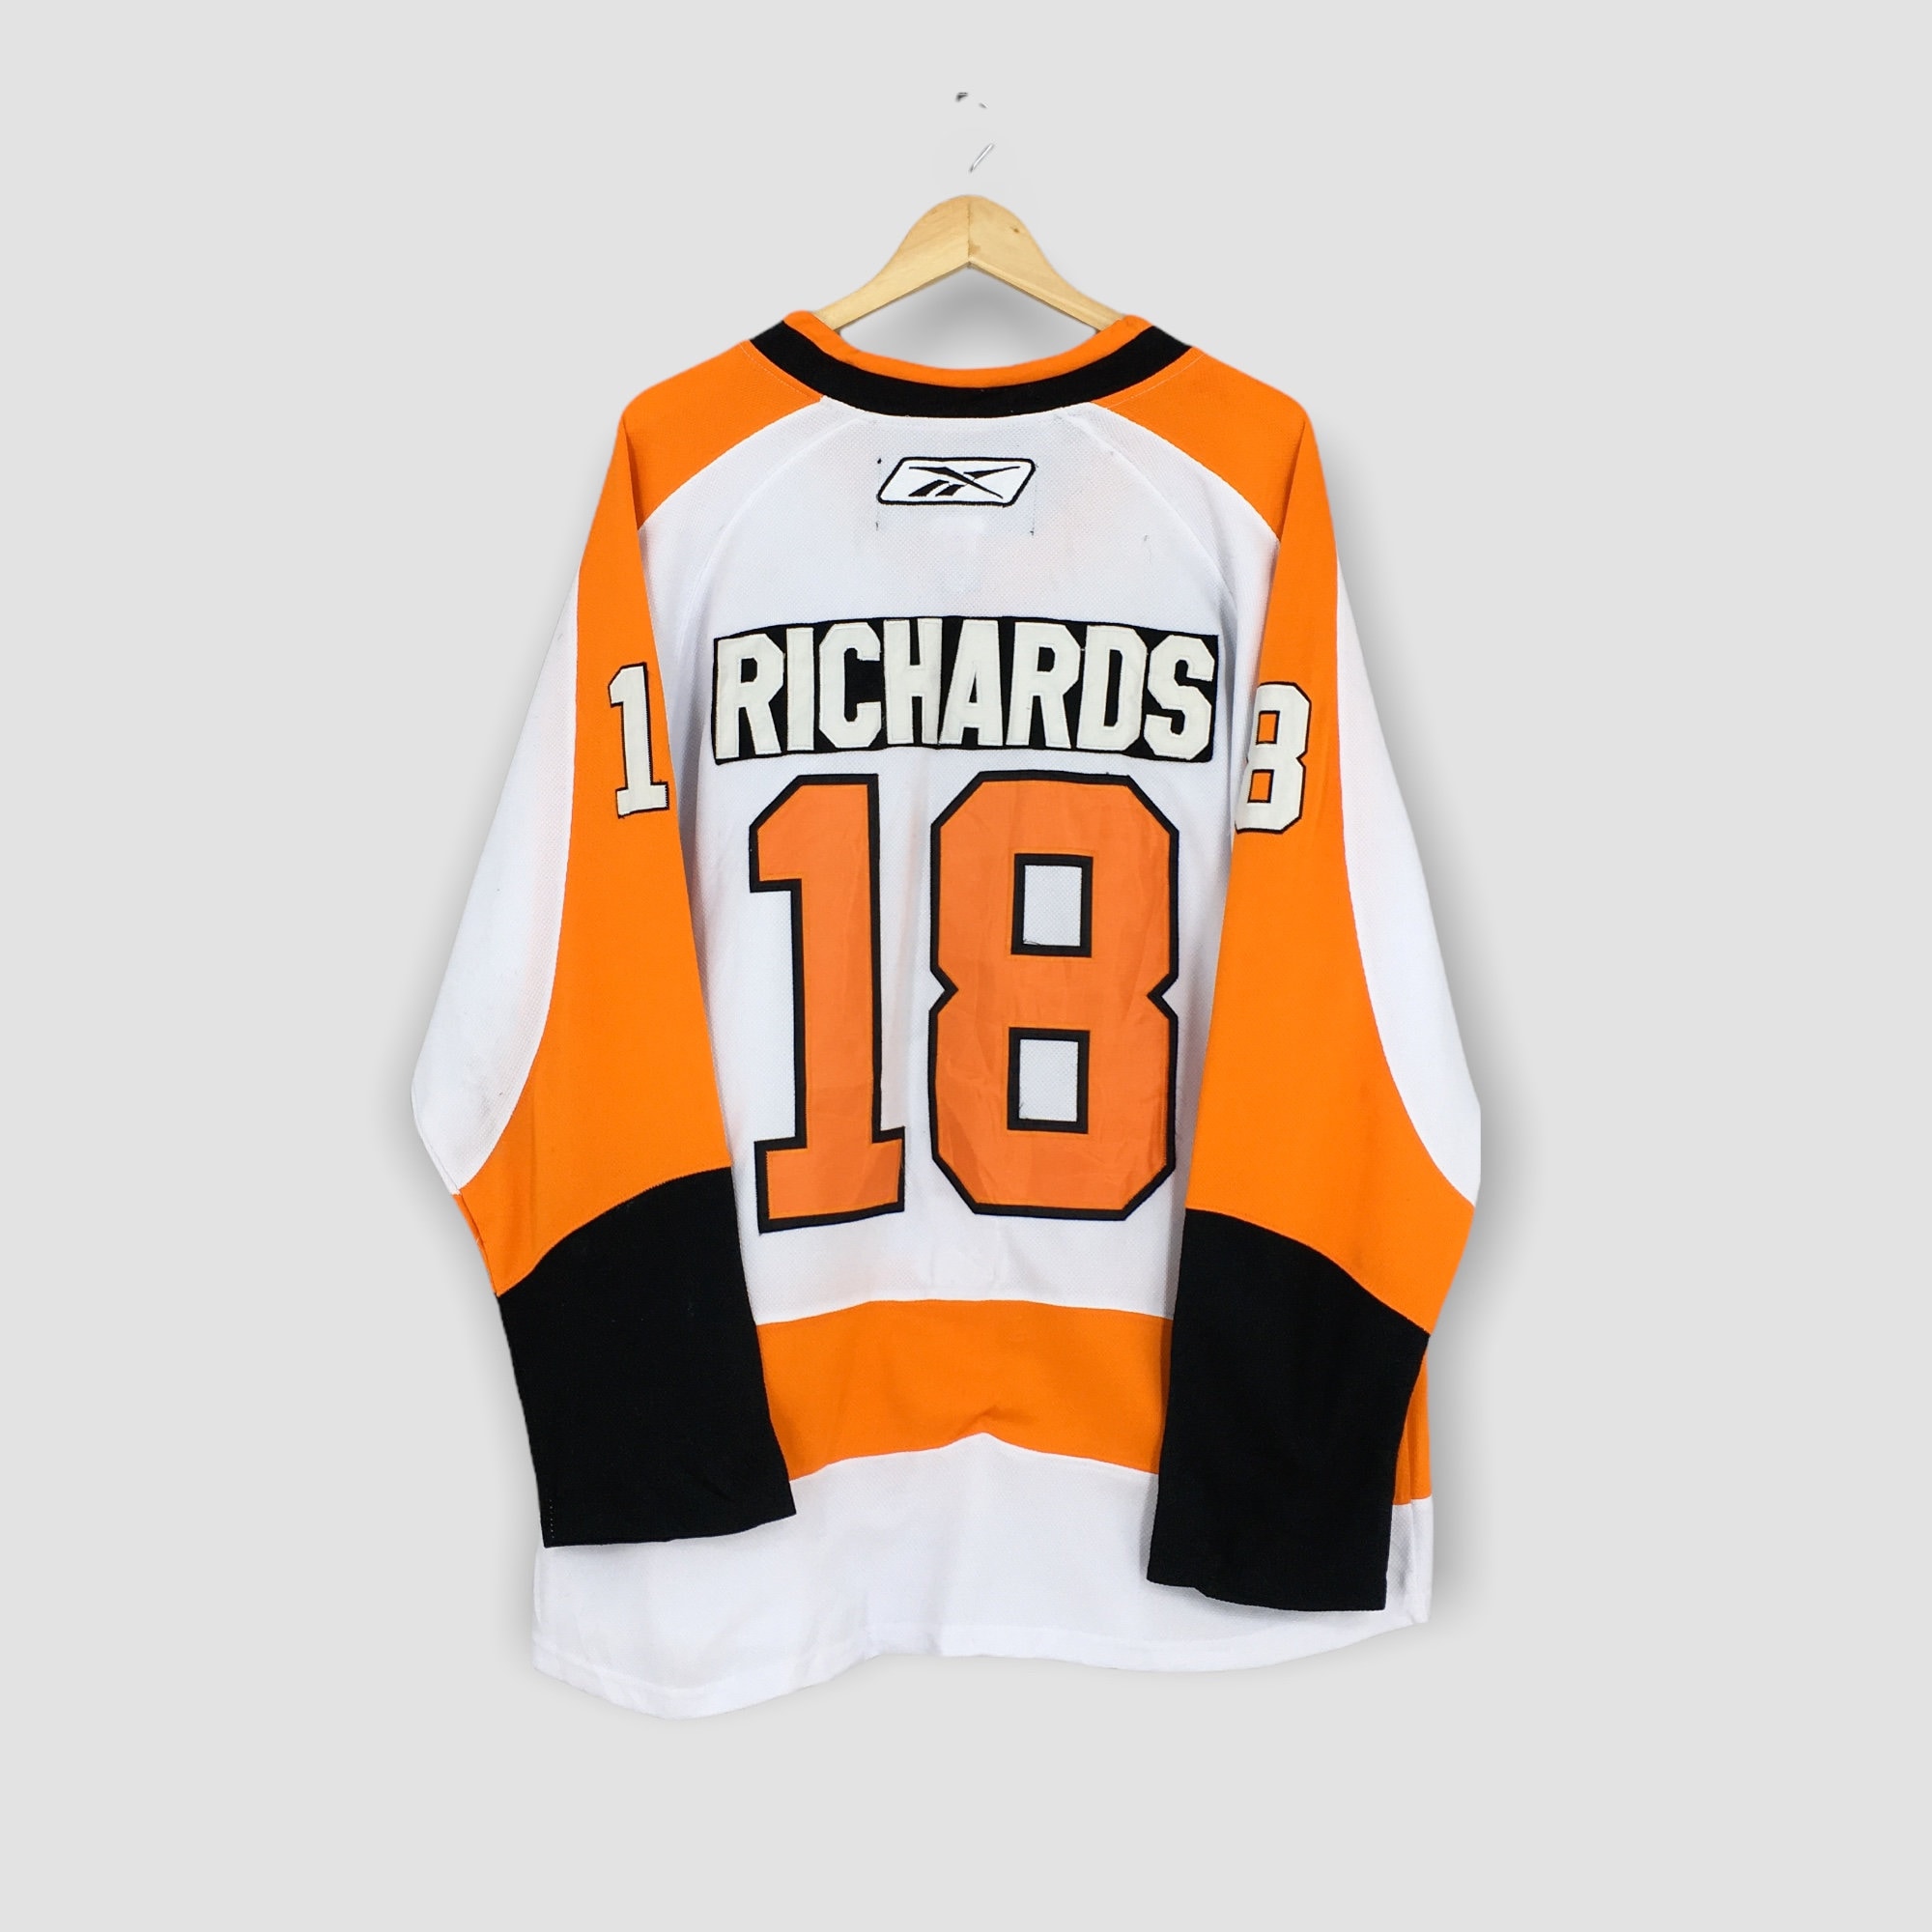 Vintage Reebok Philadelphia Flyers Player Richards 18 Nhl -  Denmark